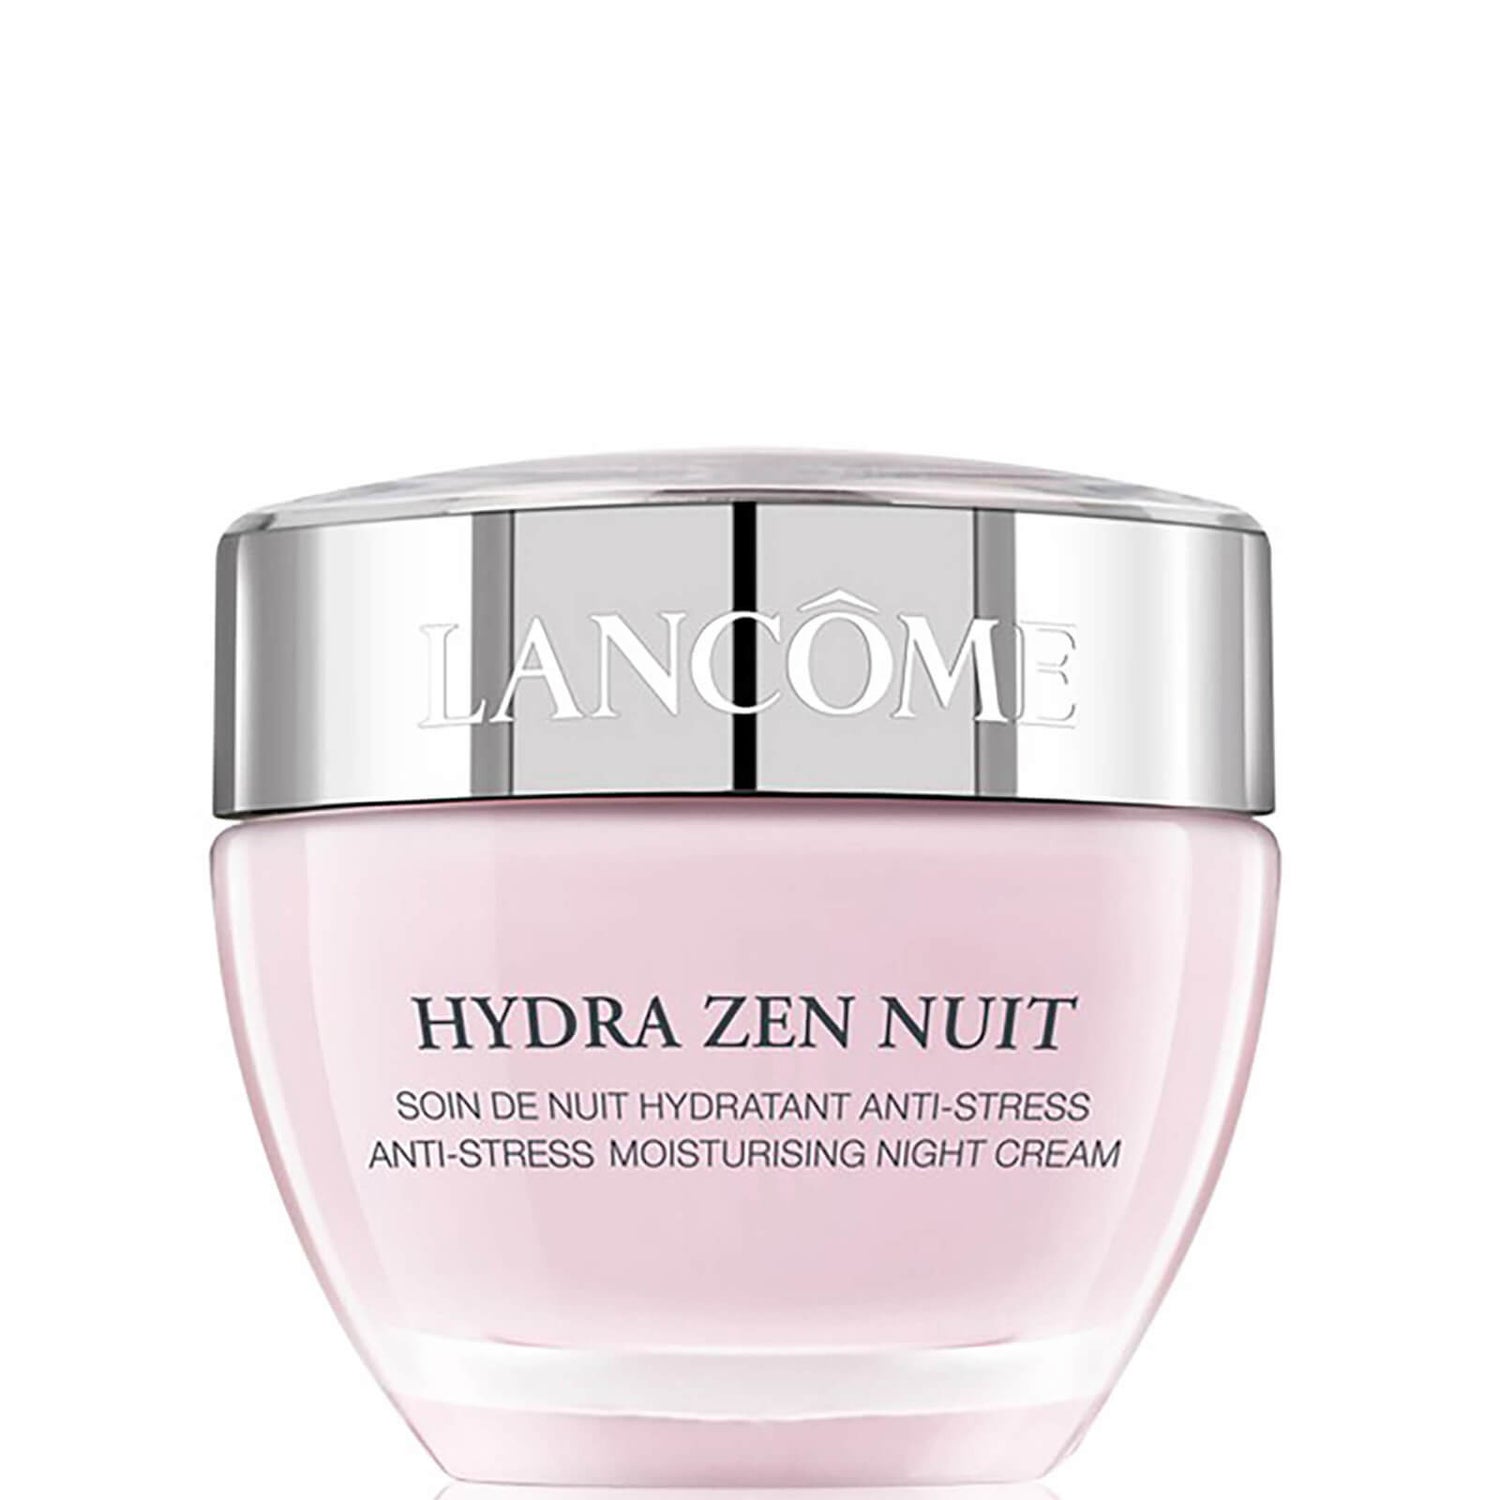 Crema de noche Hydra Zen Neurocalm de Lancôme 50 ml 